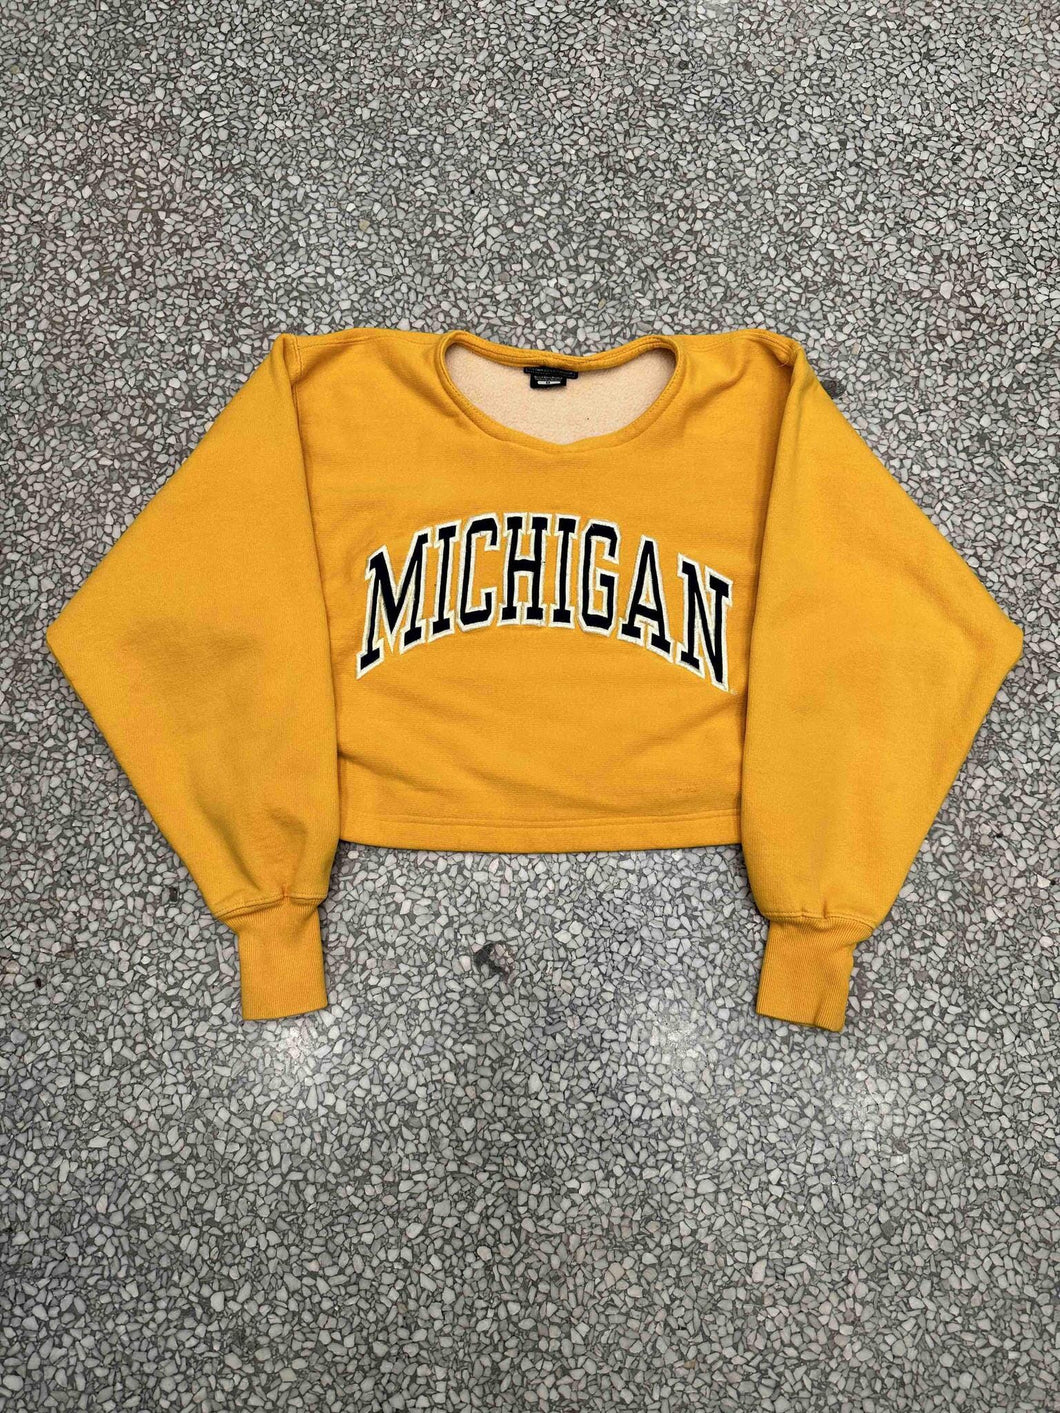 Michigan Wolverines Vintage 90s Cropped Crewneck Gold ABC Vintage 